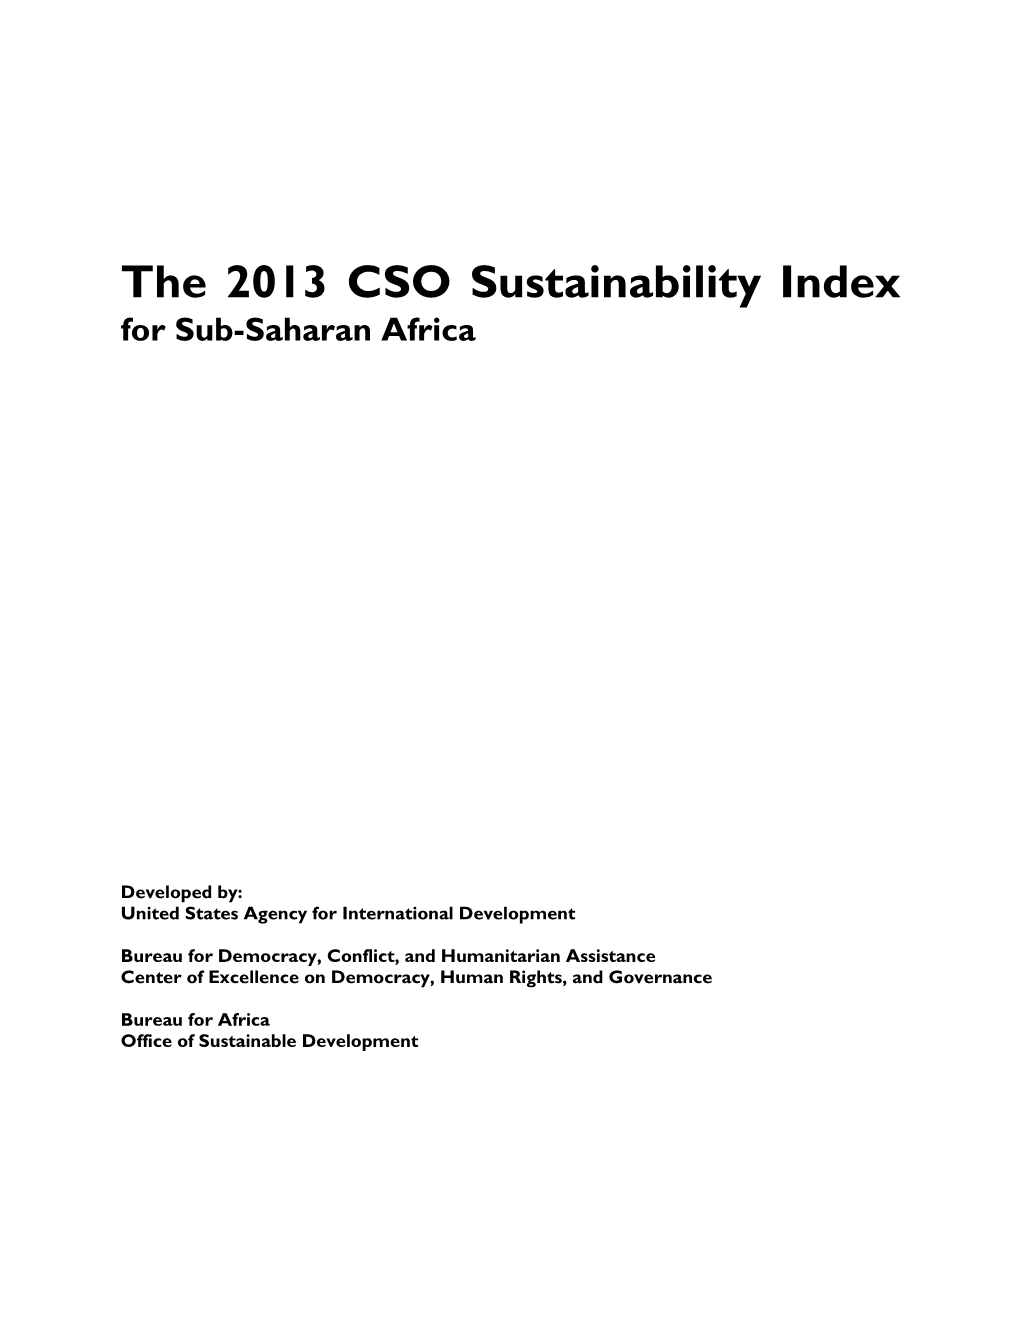 The 2013 CSO Sustainability Index for Sub-Saharan Africa